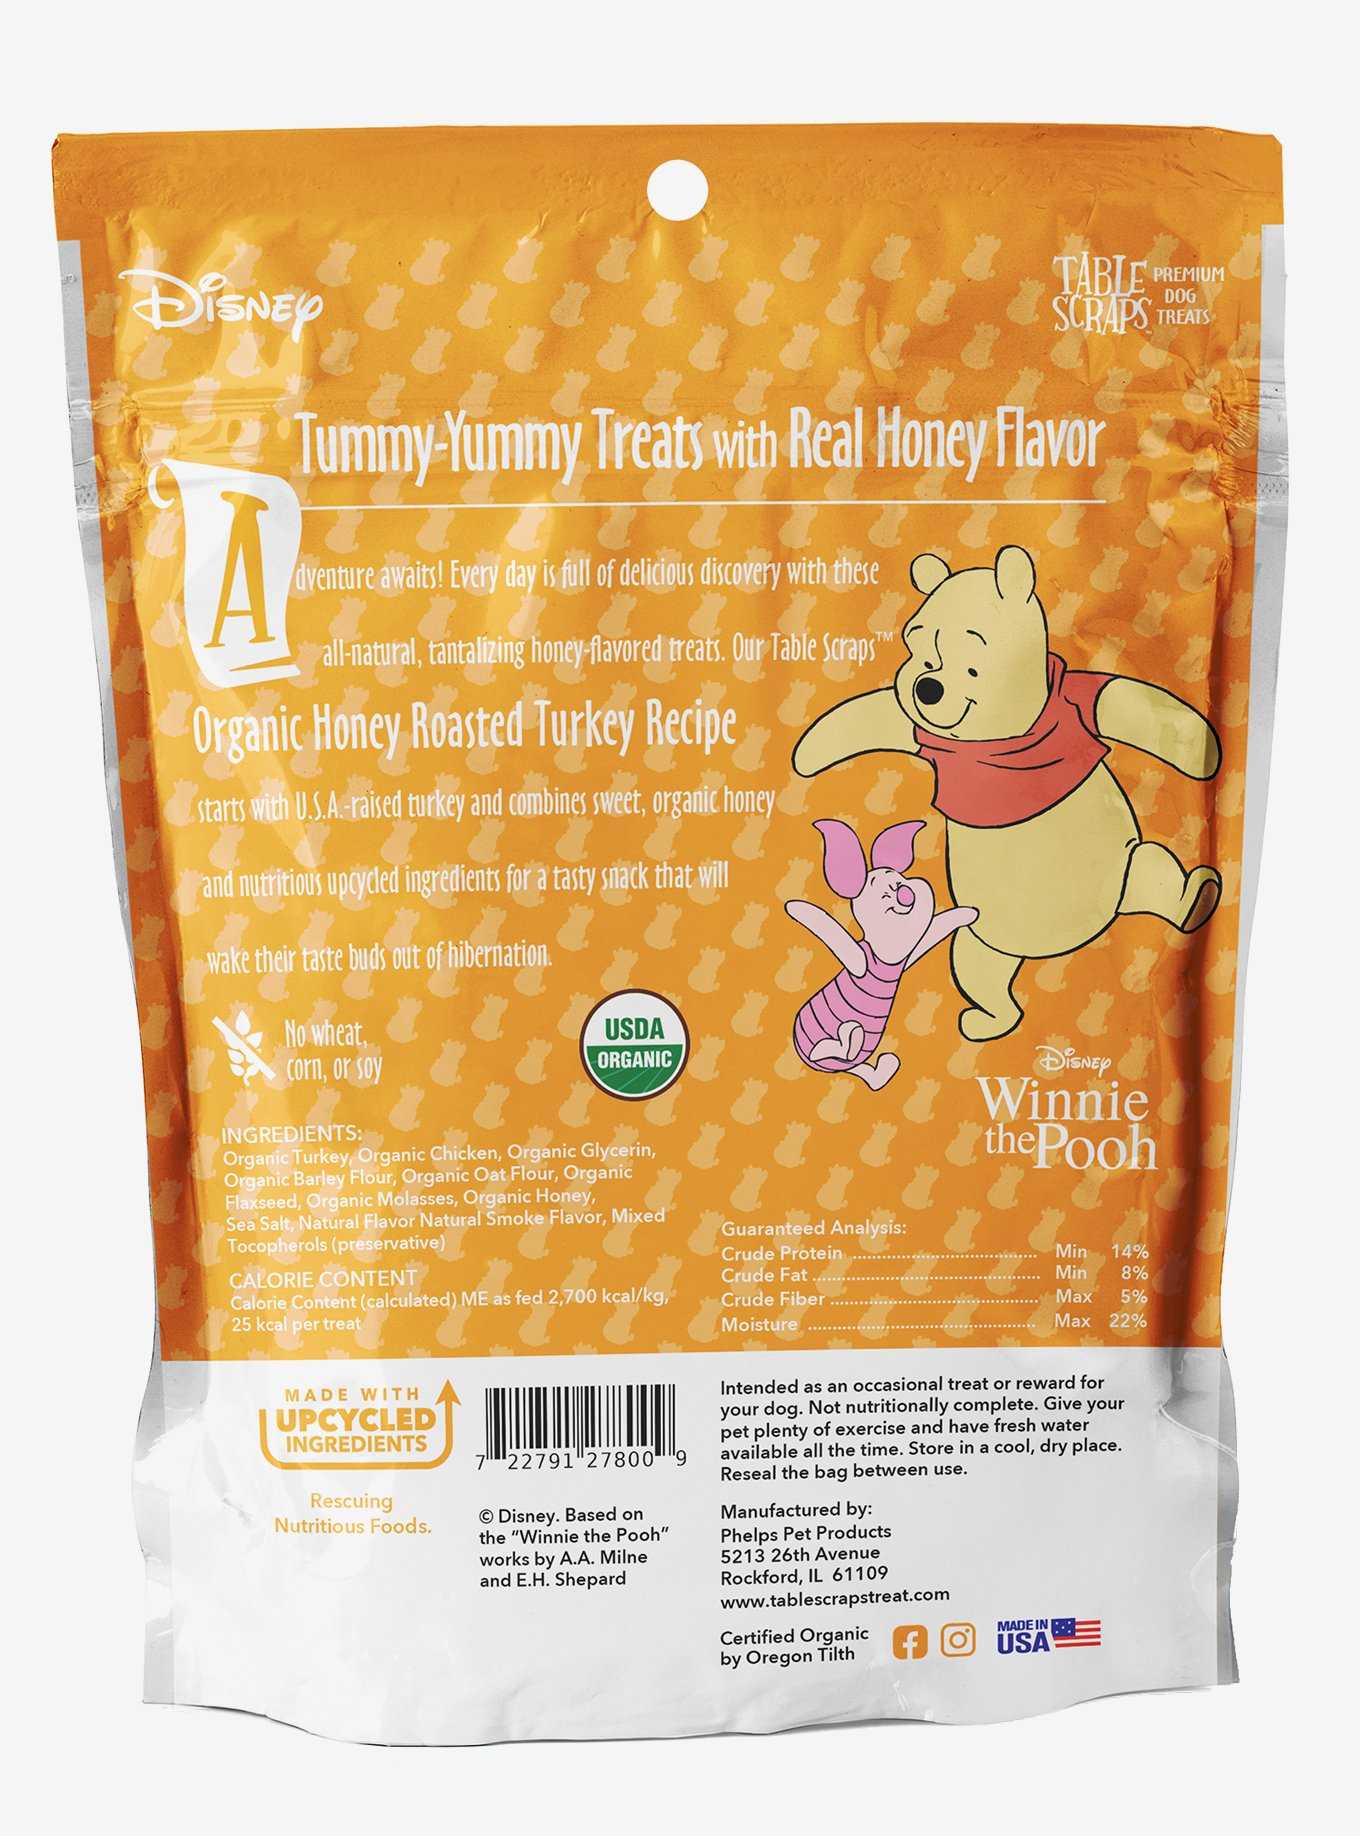 Disney Winnie the Pooh Table Scraps Organic Honey Roasted Turkey Dog Treats 5 oz. (3-Pack), , hi-res